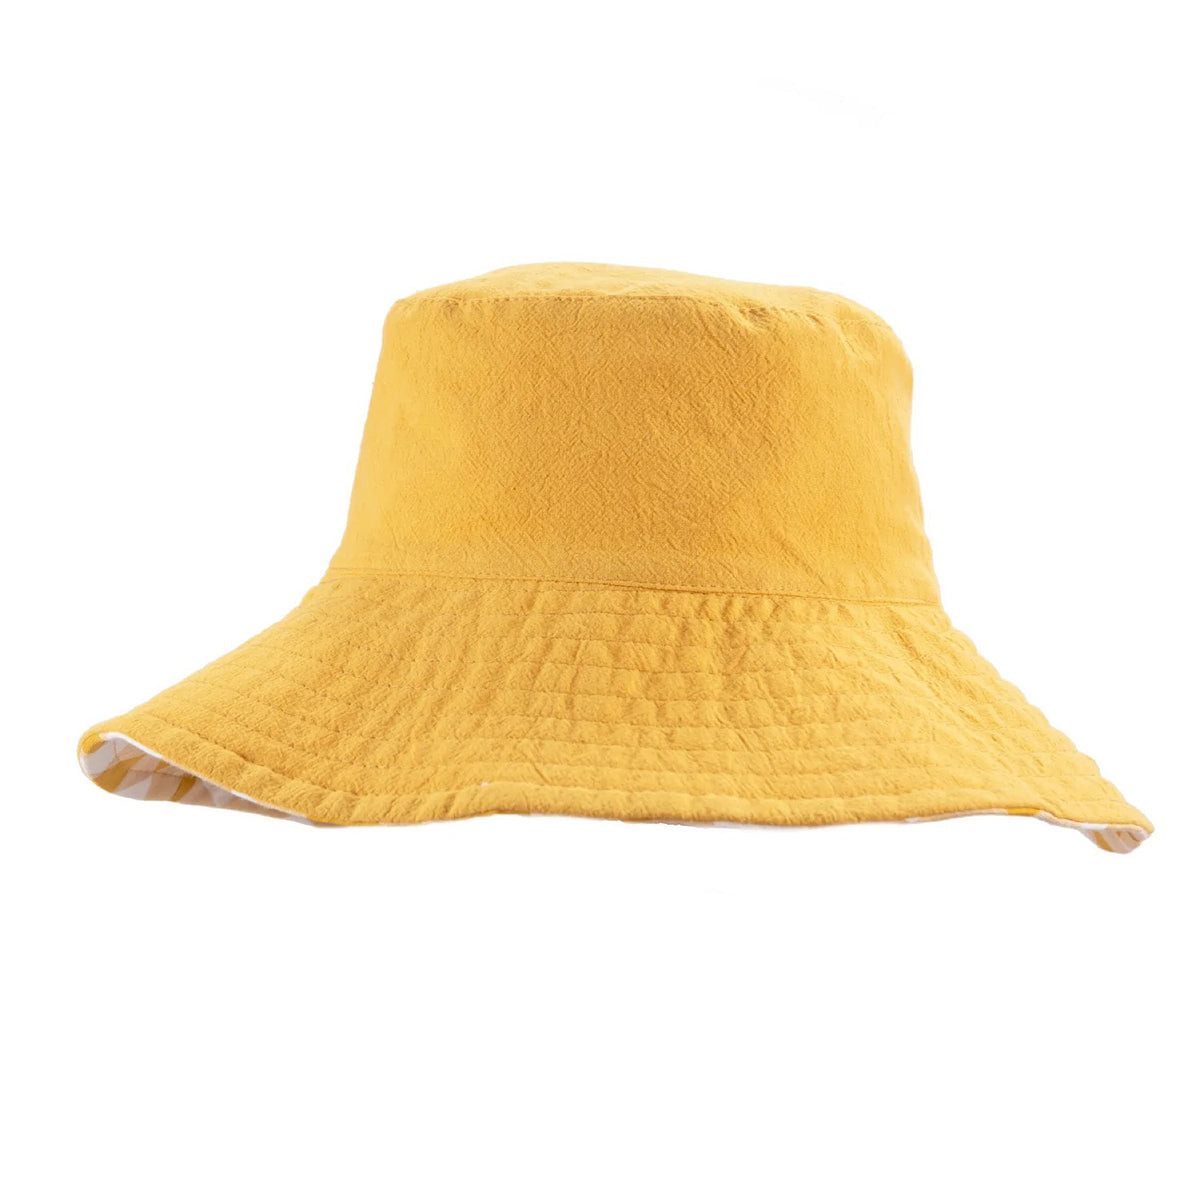 Retro Check Bucket Hat, Yellow